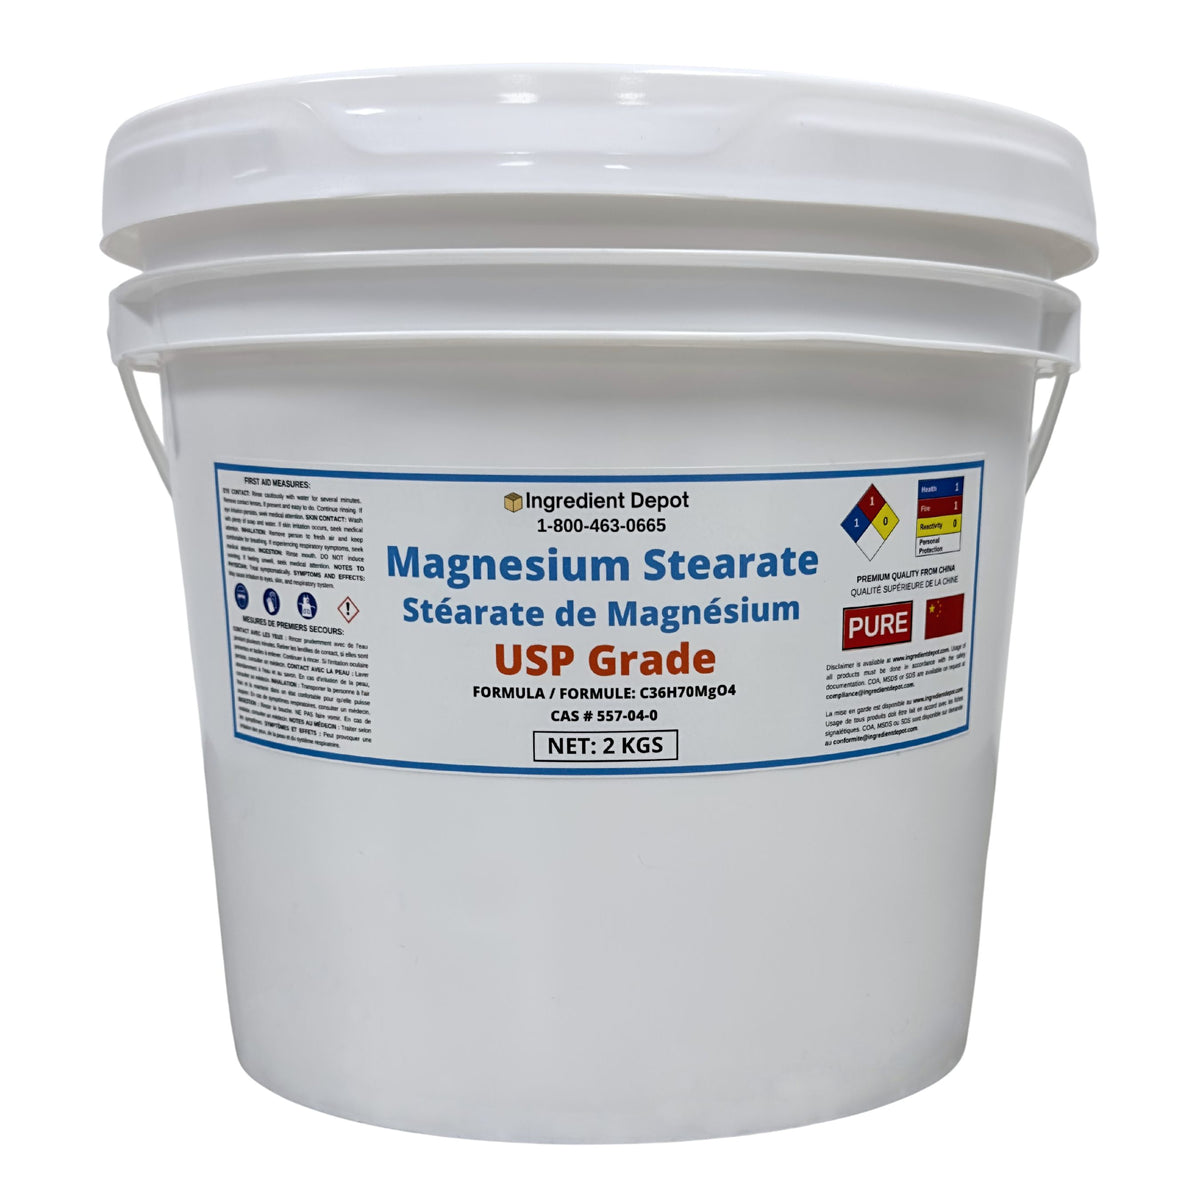 Magnesium Stearate USP Grade 2 kgs